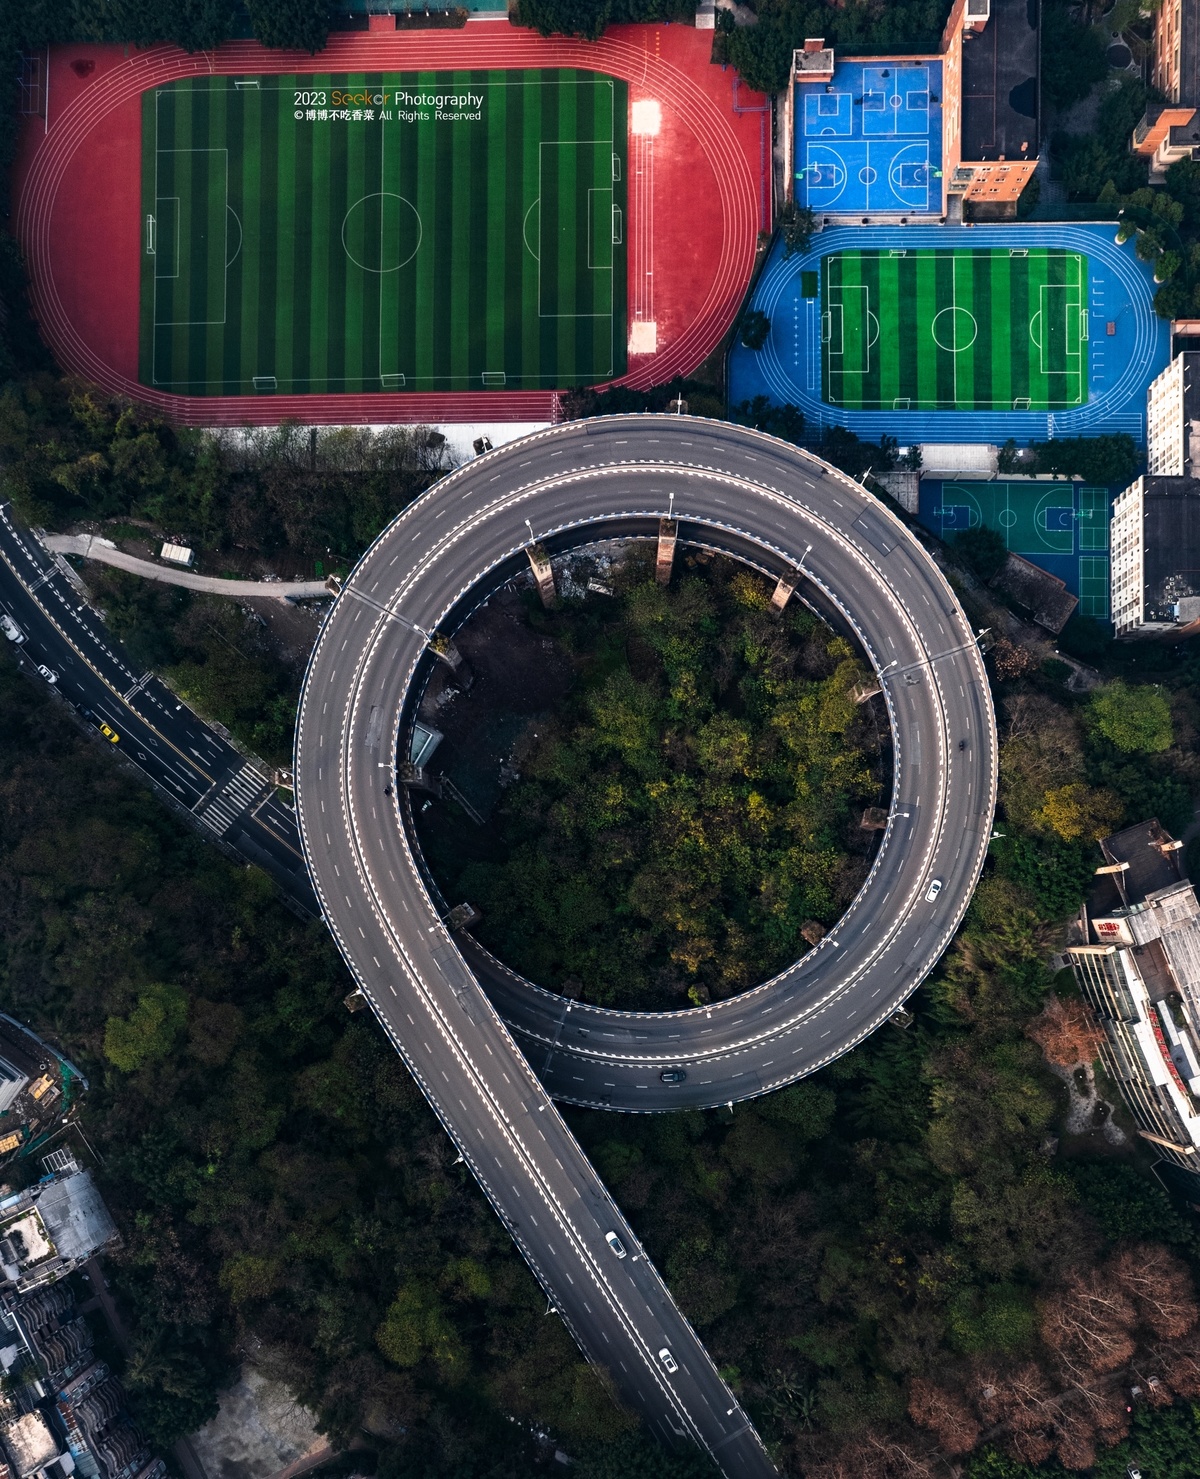 足球场和体育馆的 aerial photo